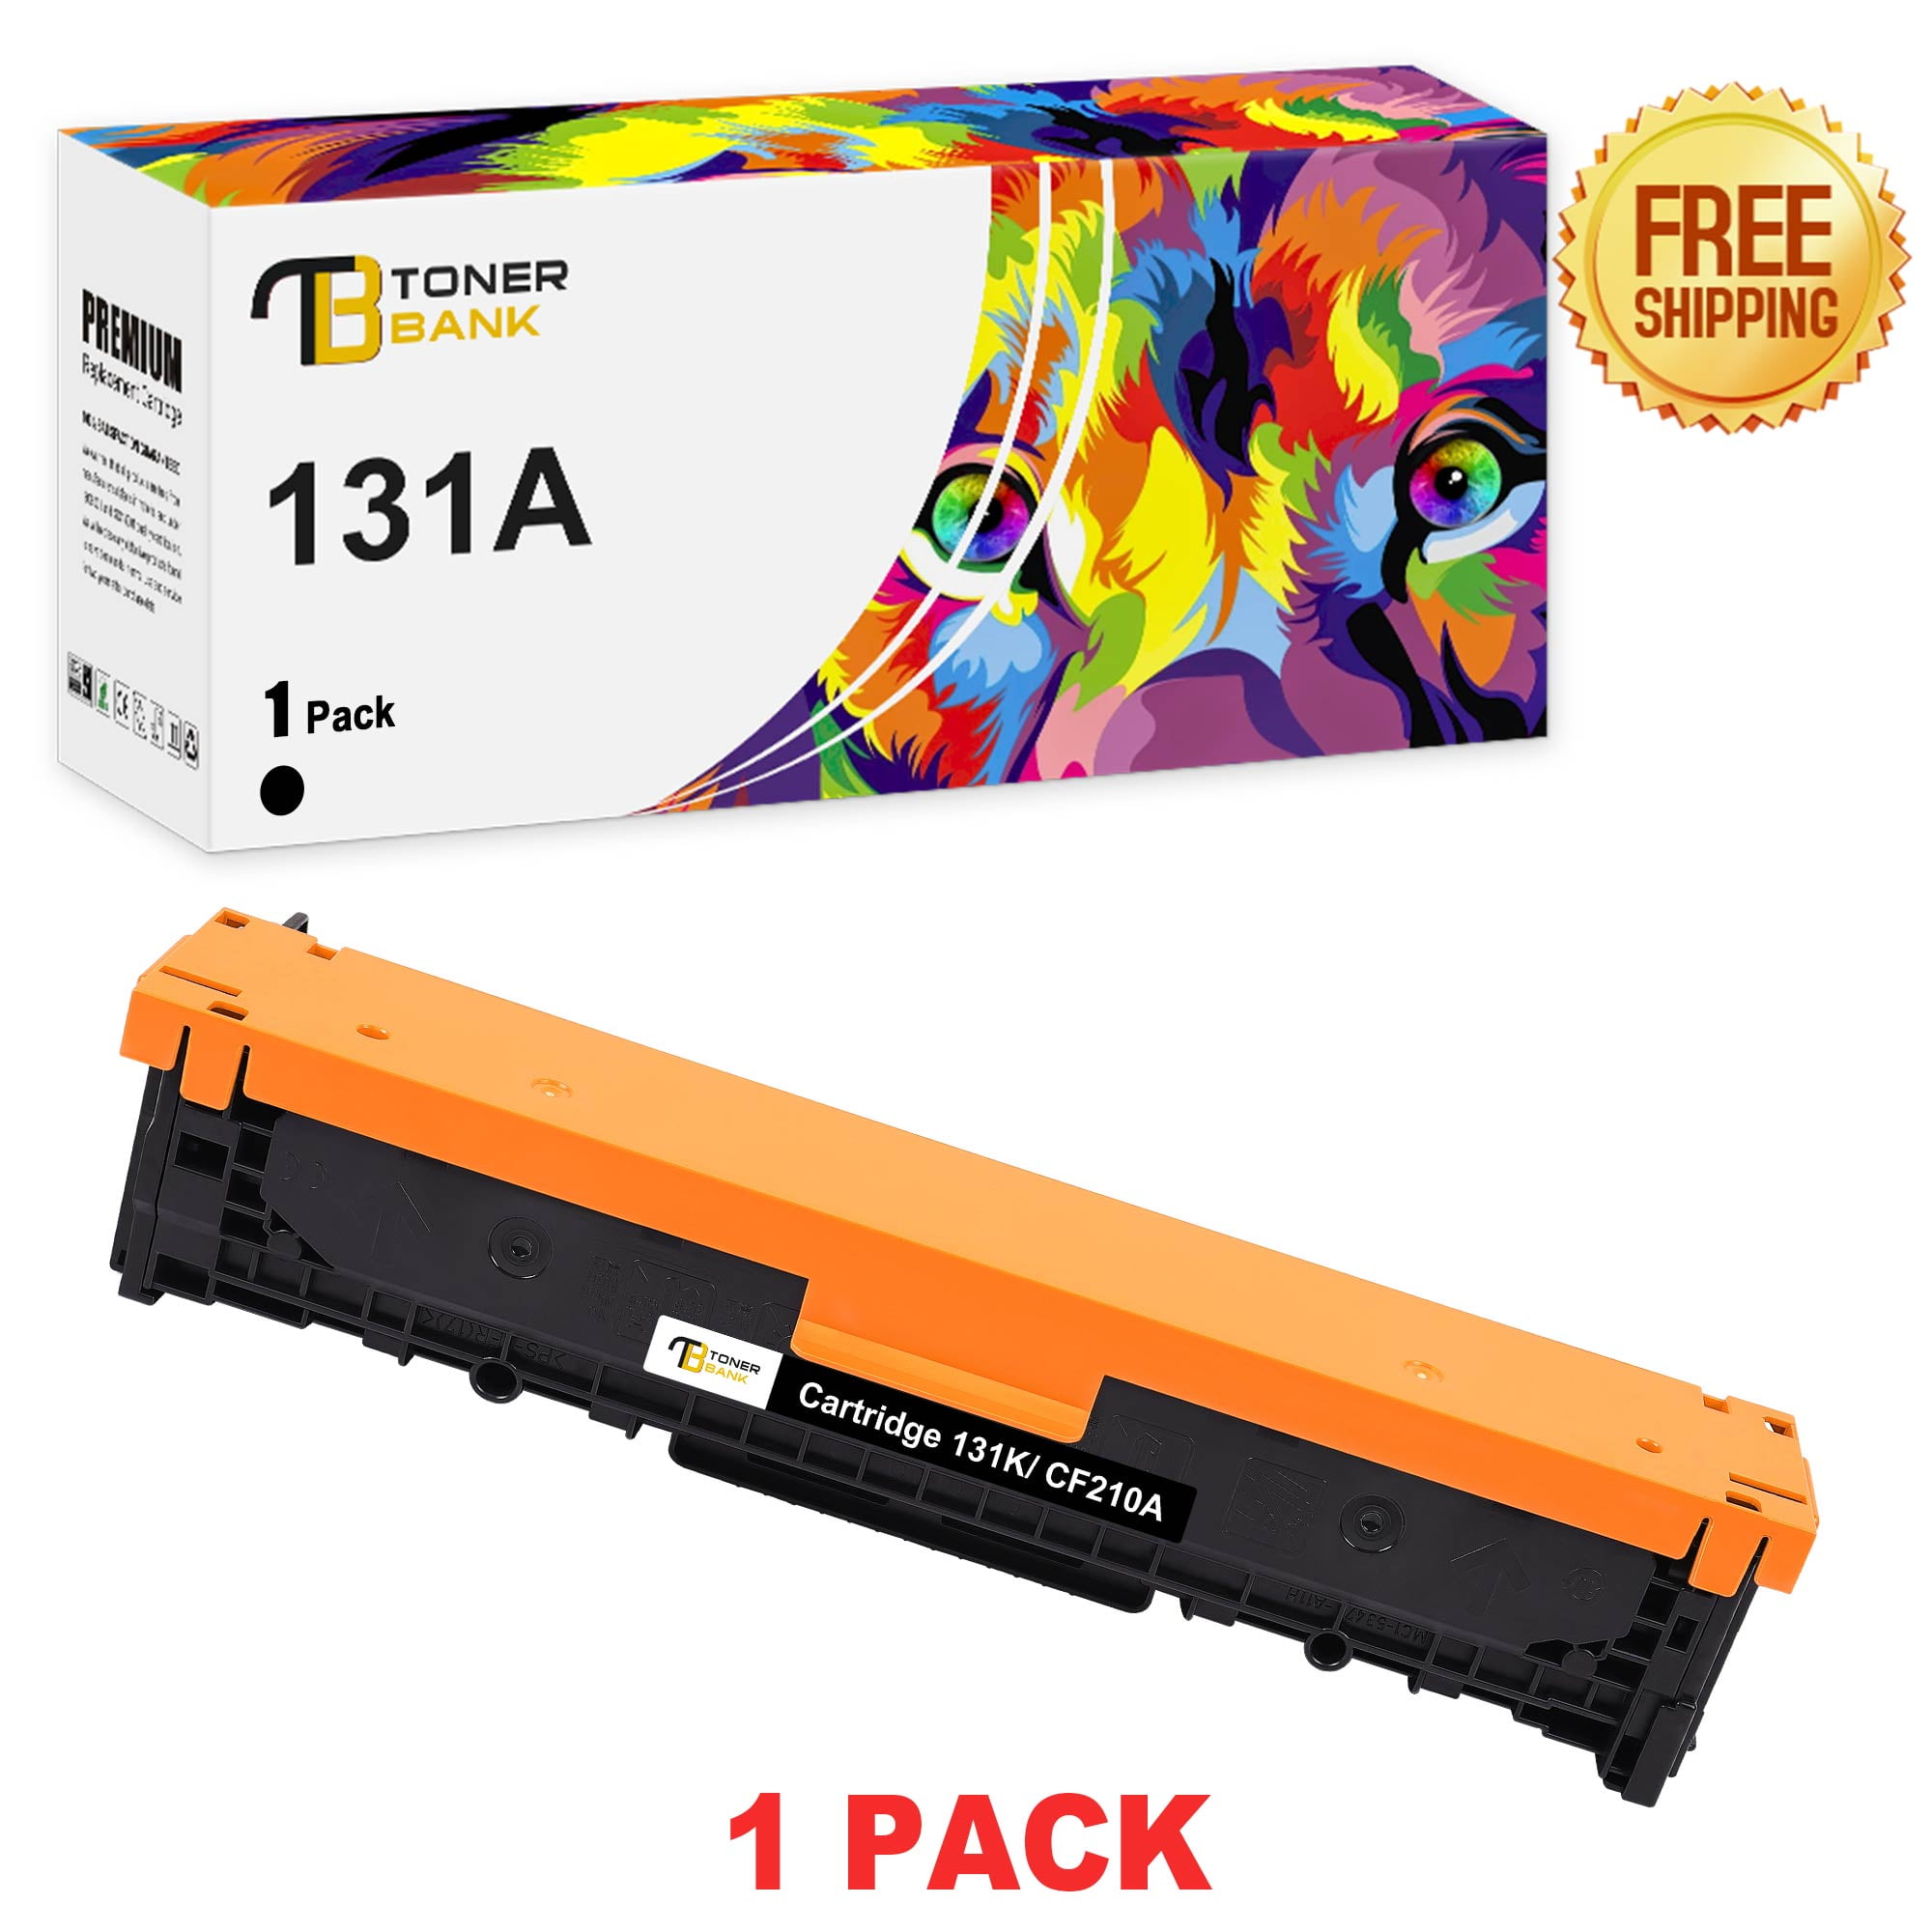 Toner Bank 1-Pack Compatible Toner Cartridge Replacement for CF211A LaserJet 200 Color M251n M251nw MFP-M276n M276nw Printer Ink Cyan - Walmart.com